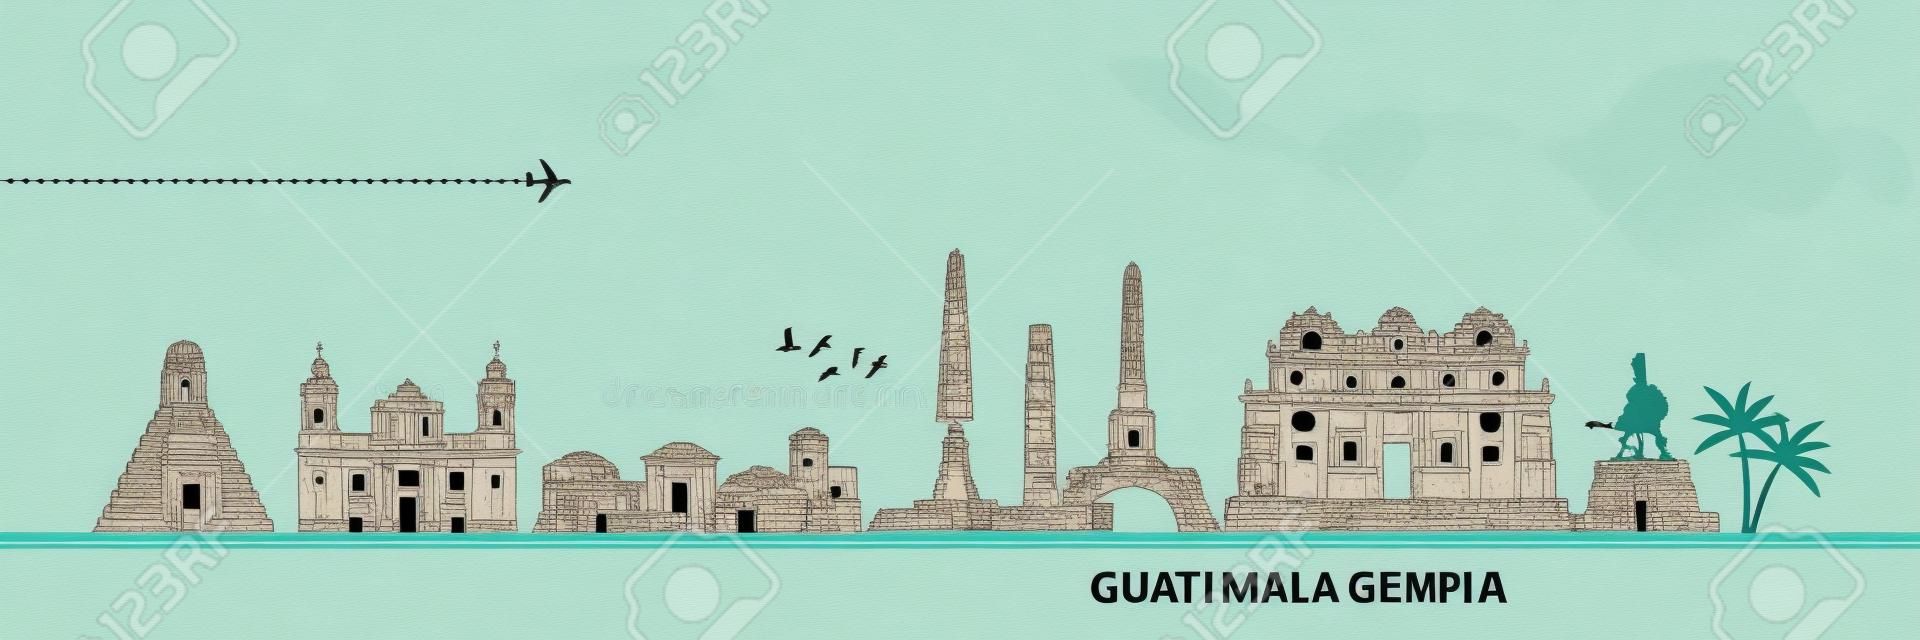 Guatemala travel destination grand vector illustration.